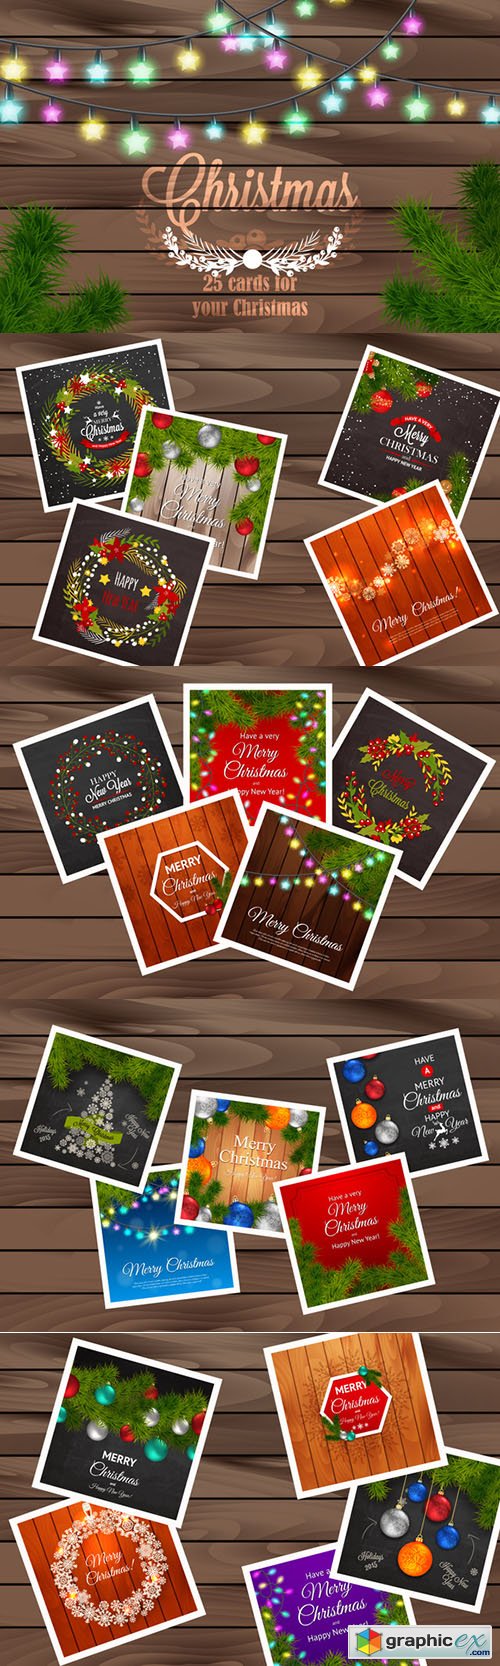  Set of 25 Christmas cards